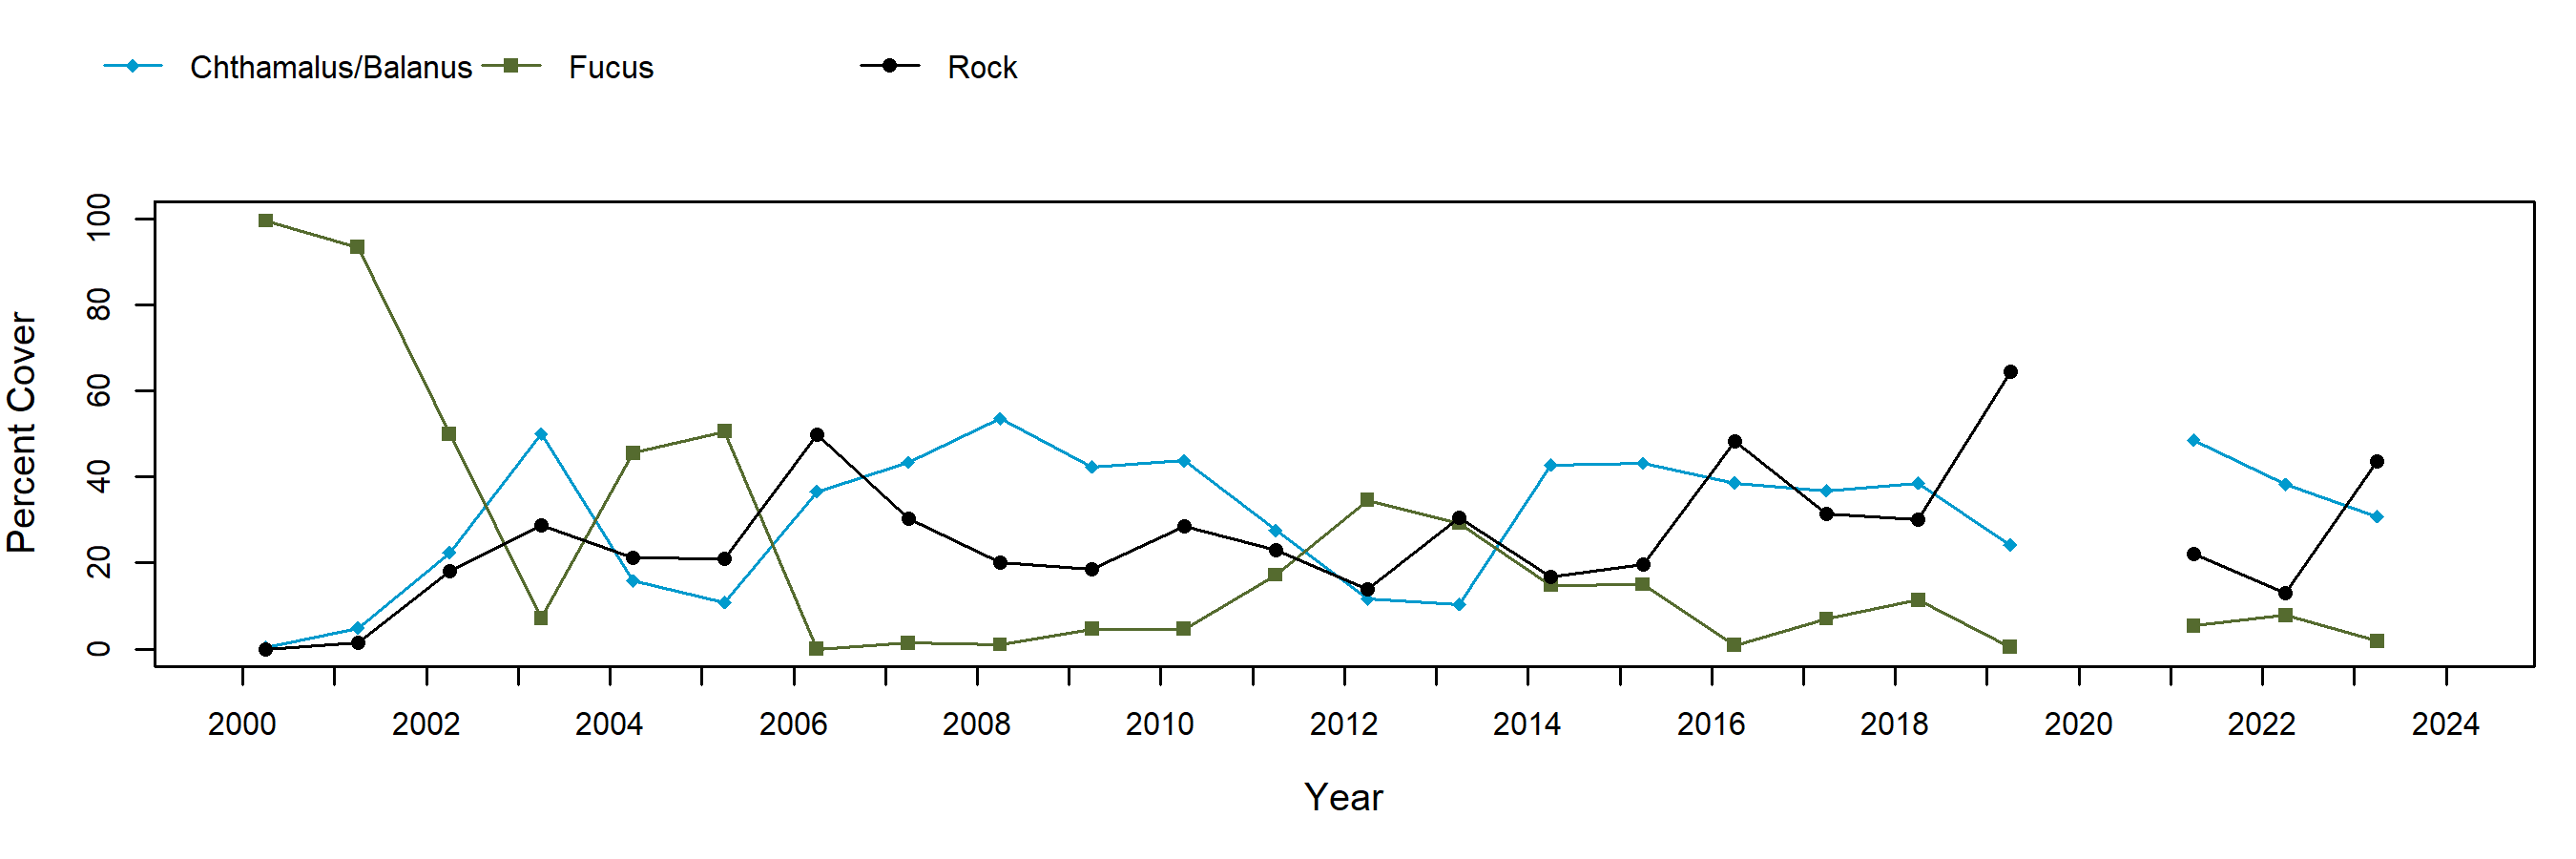 Bob Creek Fucus trend plot